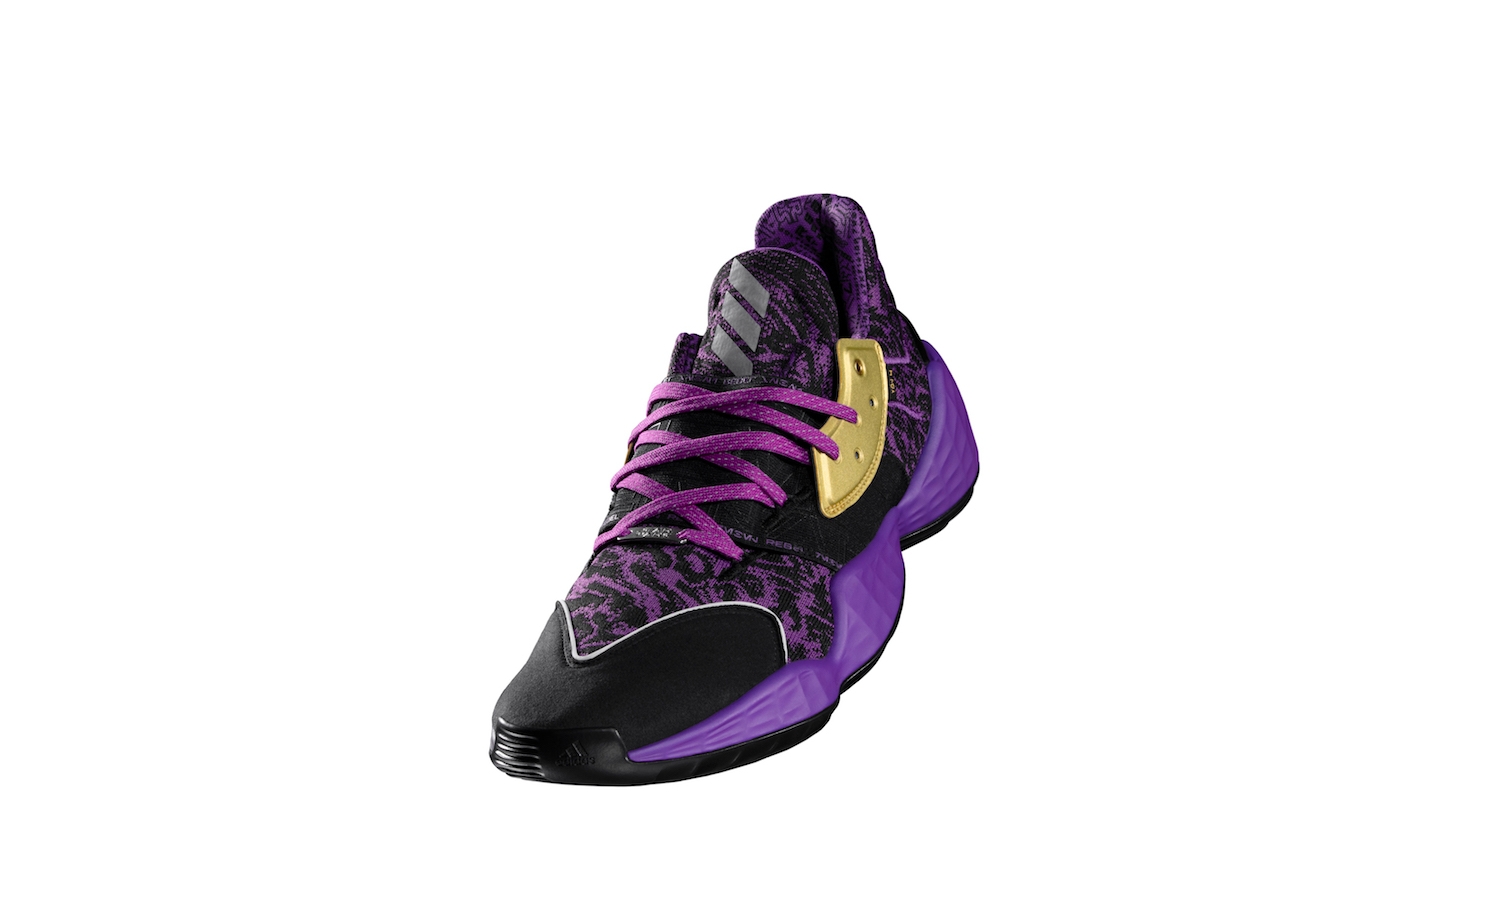 adidas Basketball 携手 STAR WARS 发售新系列篮球鞋